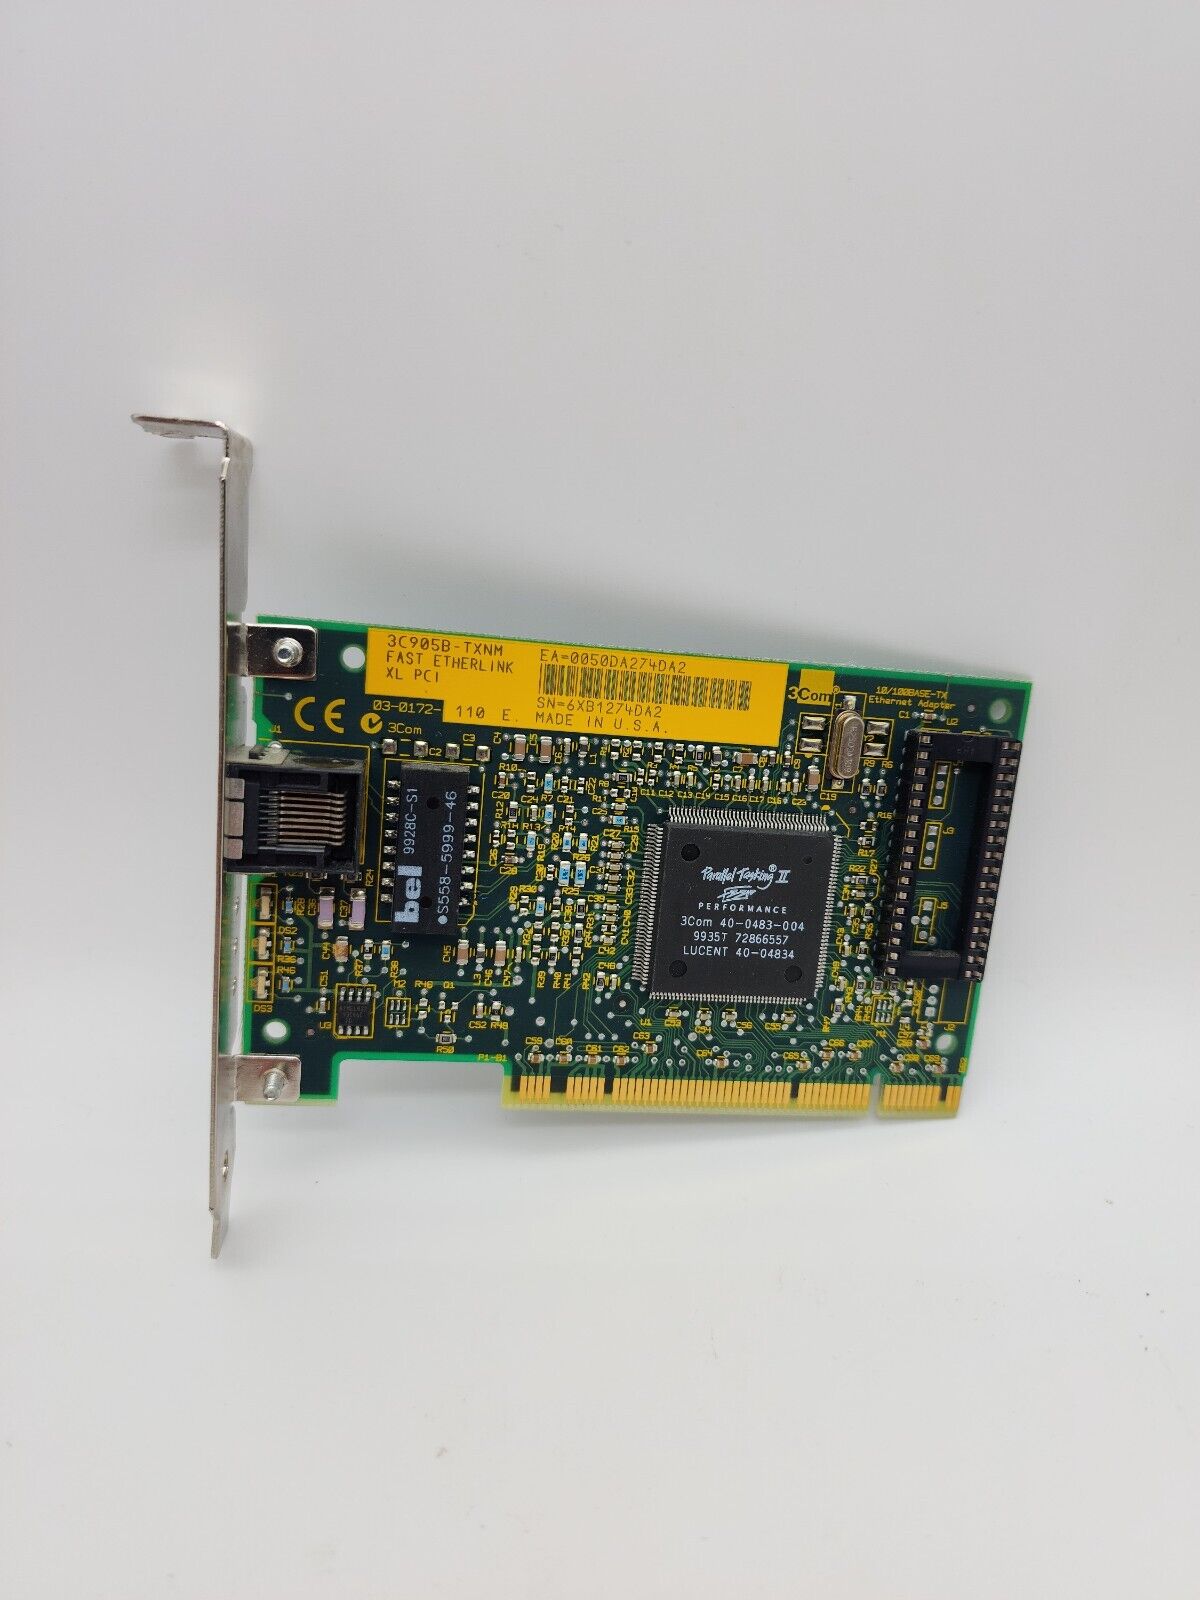 3Com 3C905B-TXNM Fast Etherlink XL PCI - Vintage NIC - Card Only